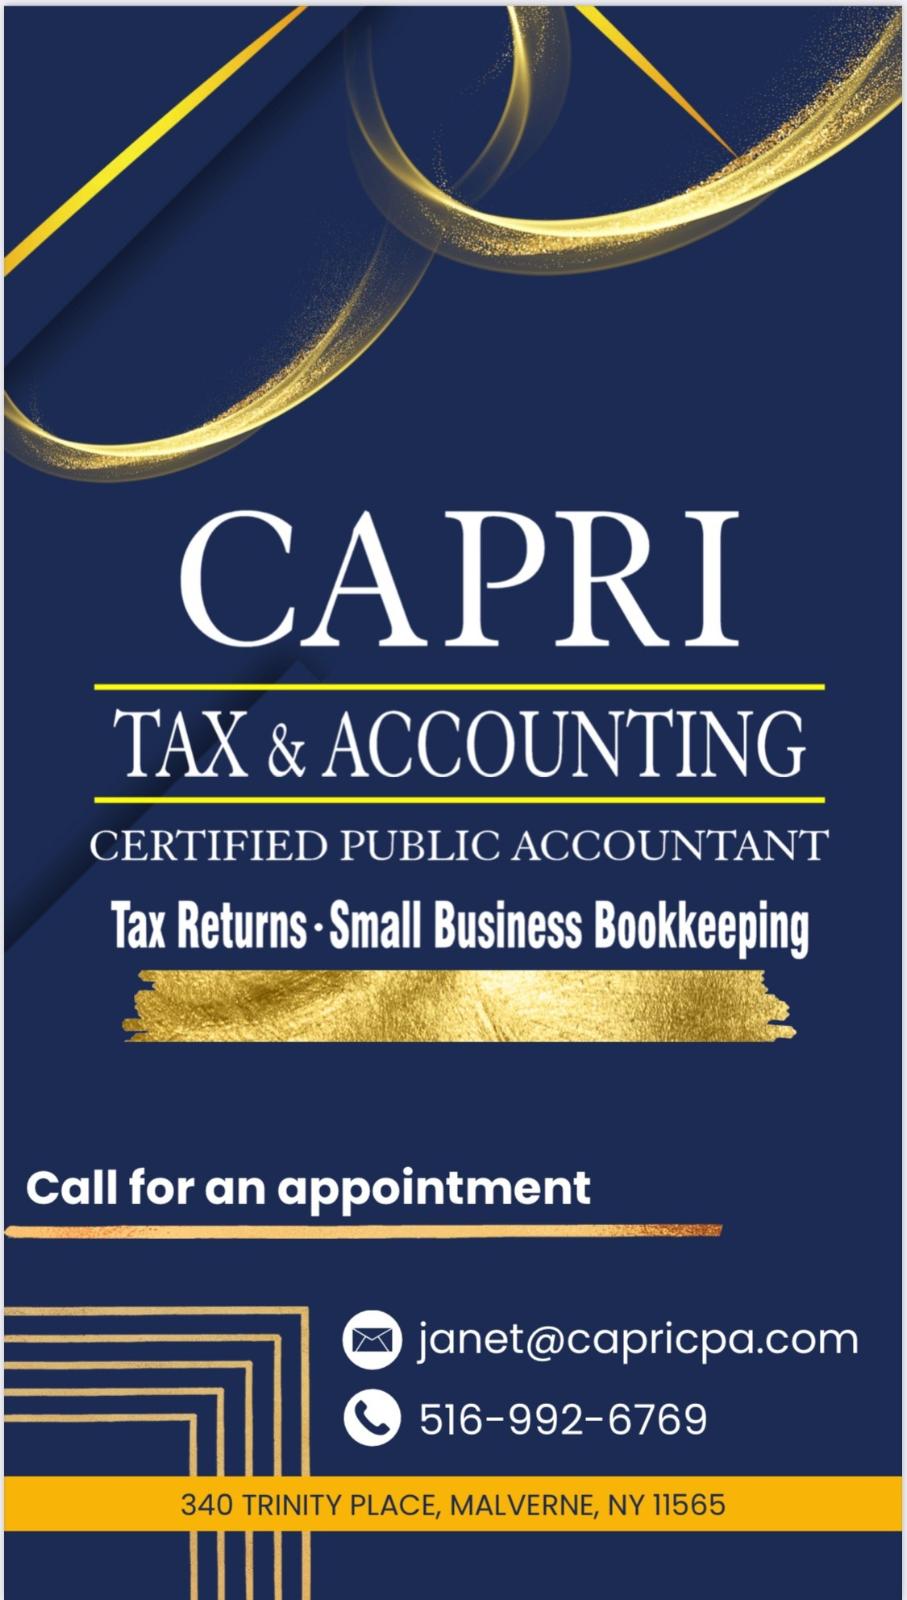 Capri Tax & Accounting Services 340 Trinity Pl, Malverne New York 11565